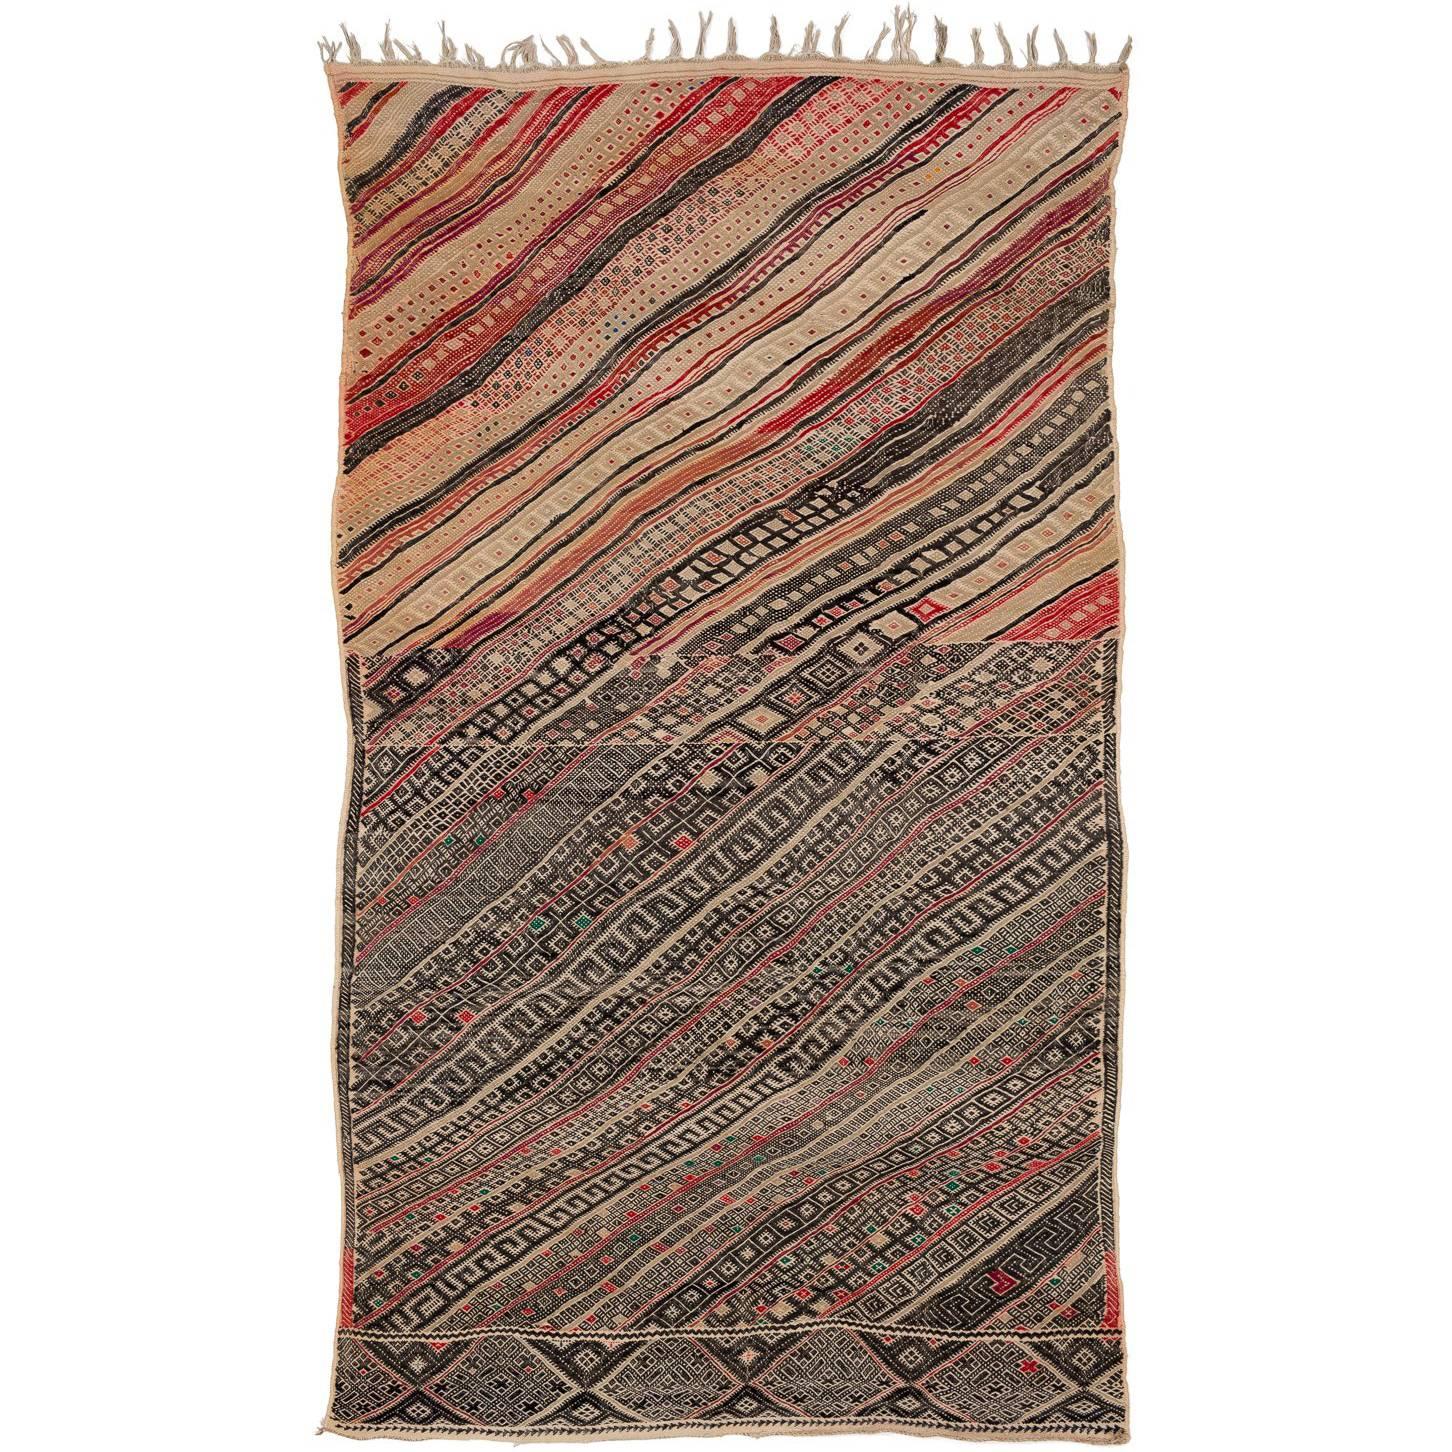 Vintage Moroccan Striped Kilim Rug